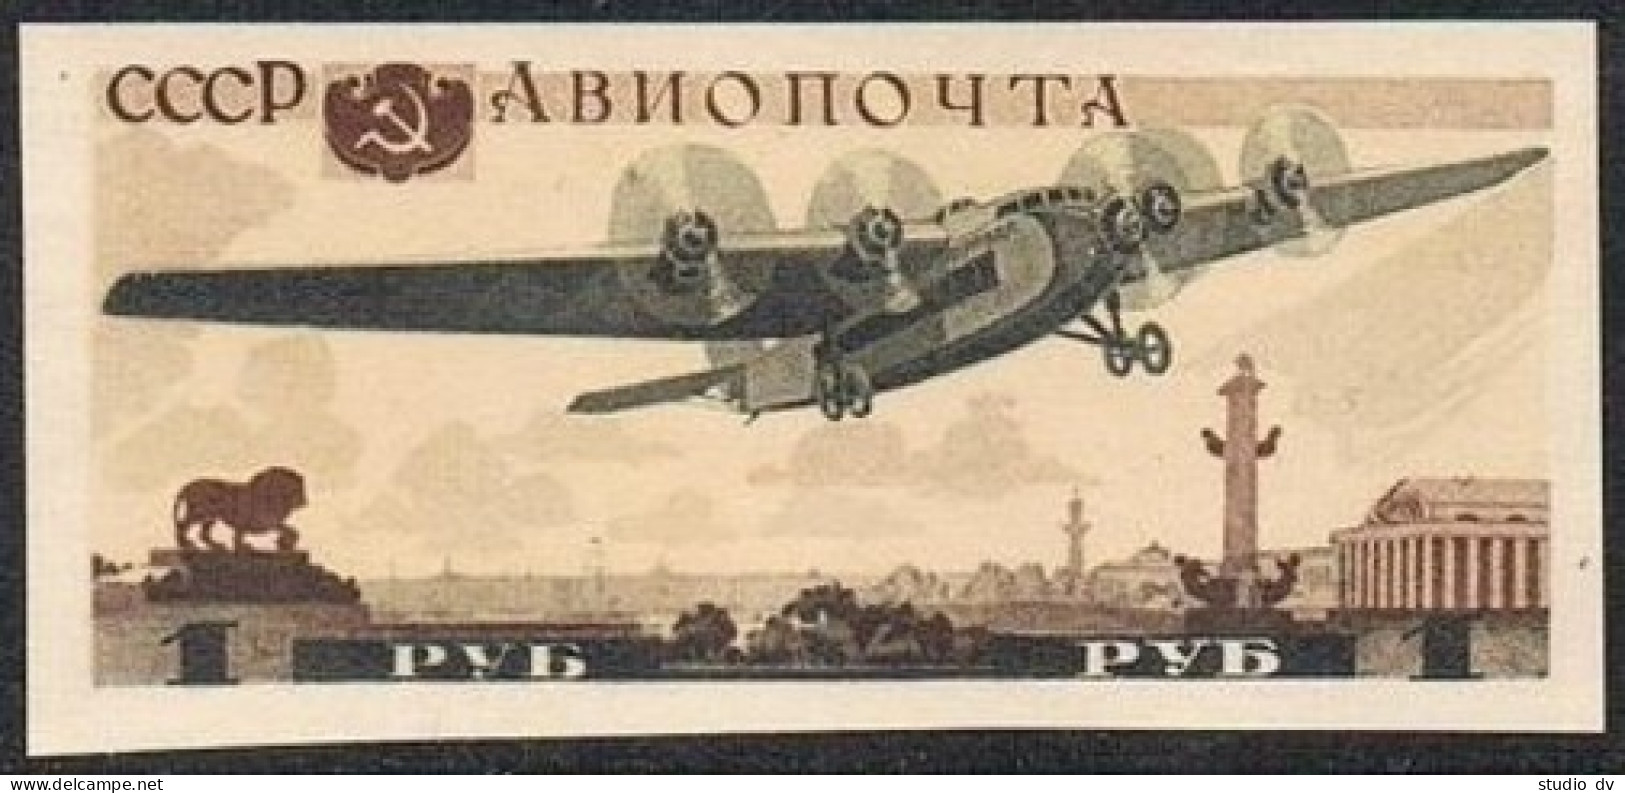 Russia C75 Imperf,MNH.Michel 570. Aviation Exhibition 1937,Moscow. - Ongebruikt